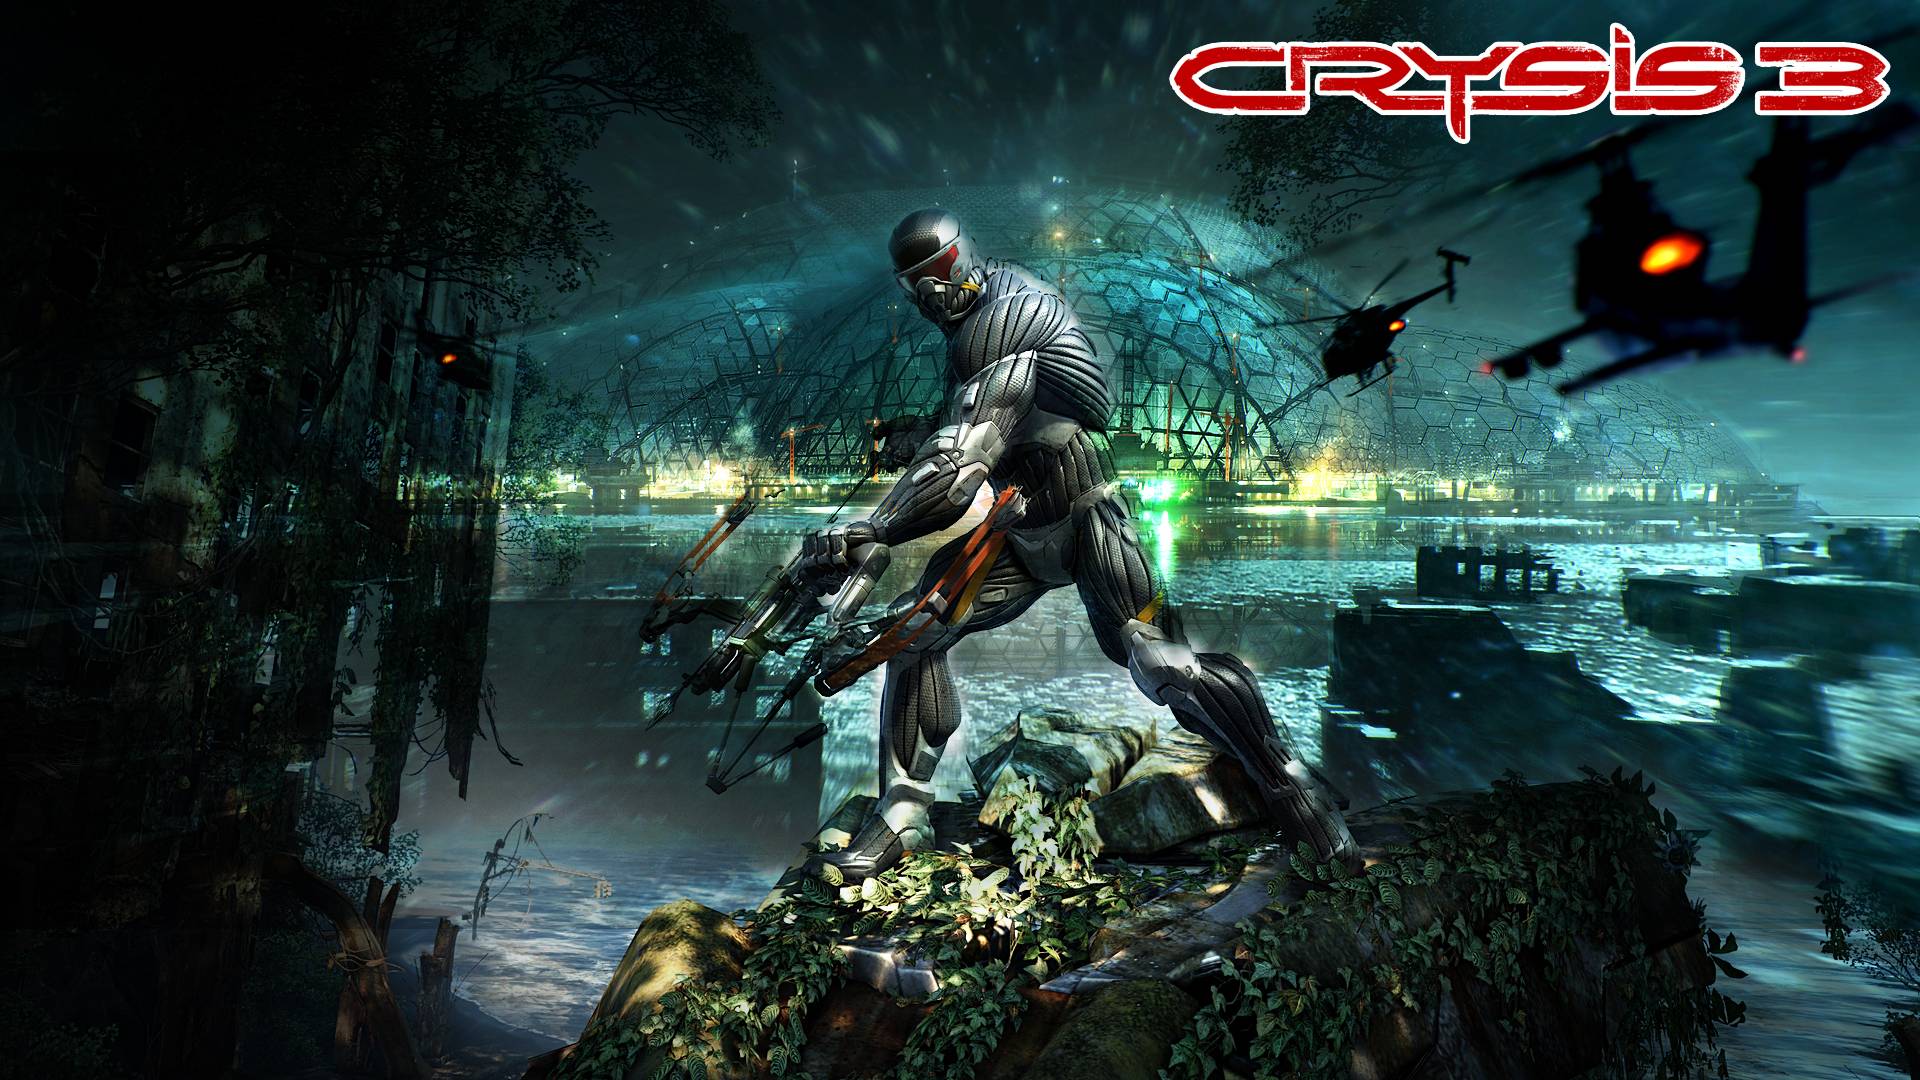 Download HD Crysis 3 Game Wallpaper | WallpaperCow.com